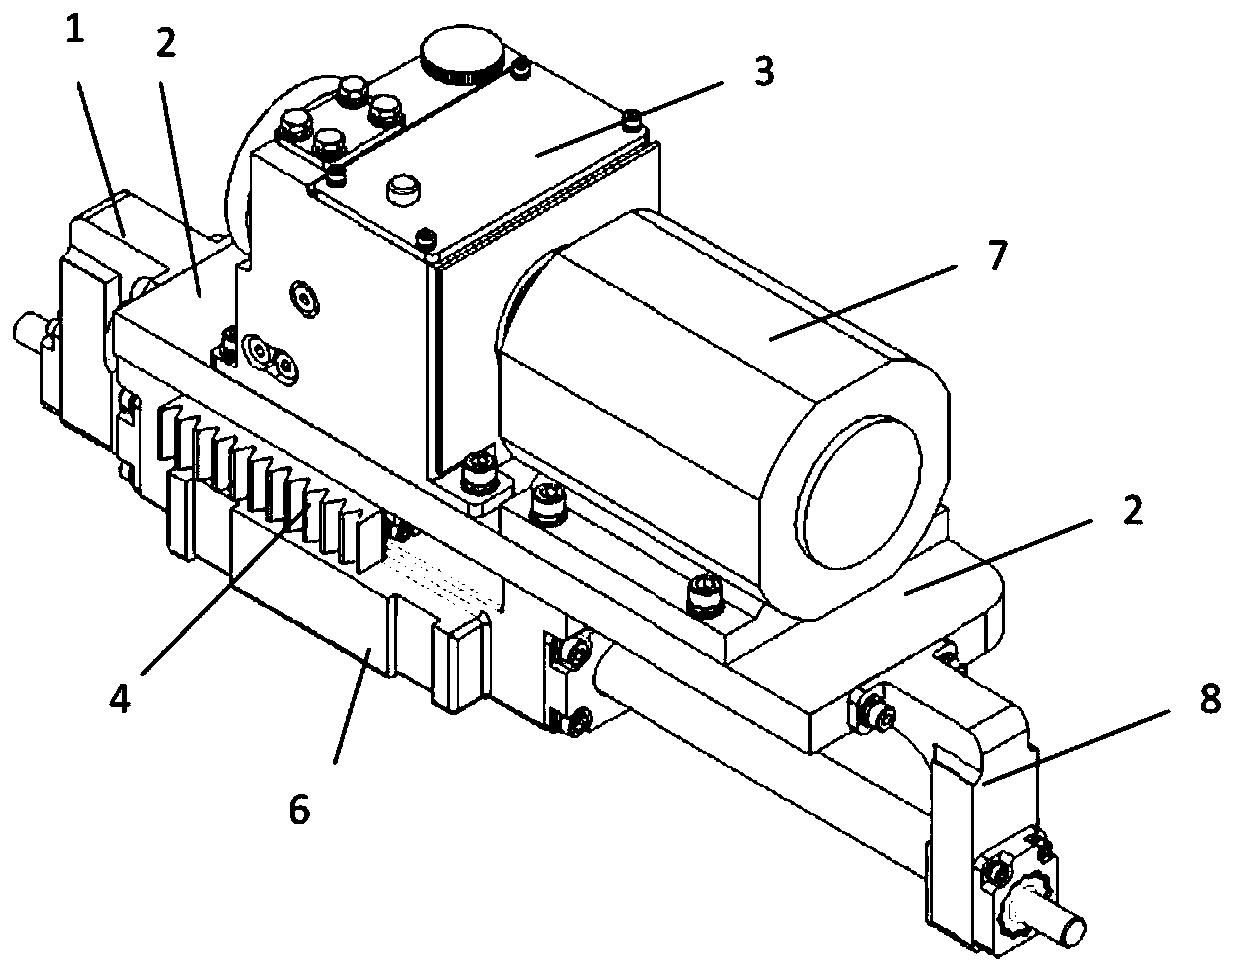 Integrated hydraulic unit for electro-hydraulic switch machine